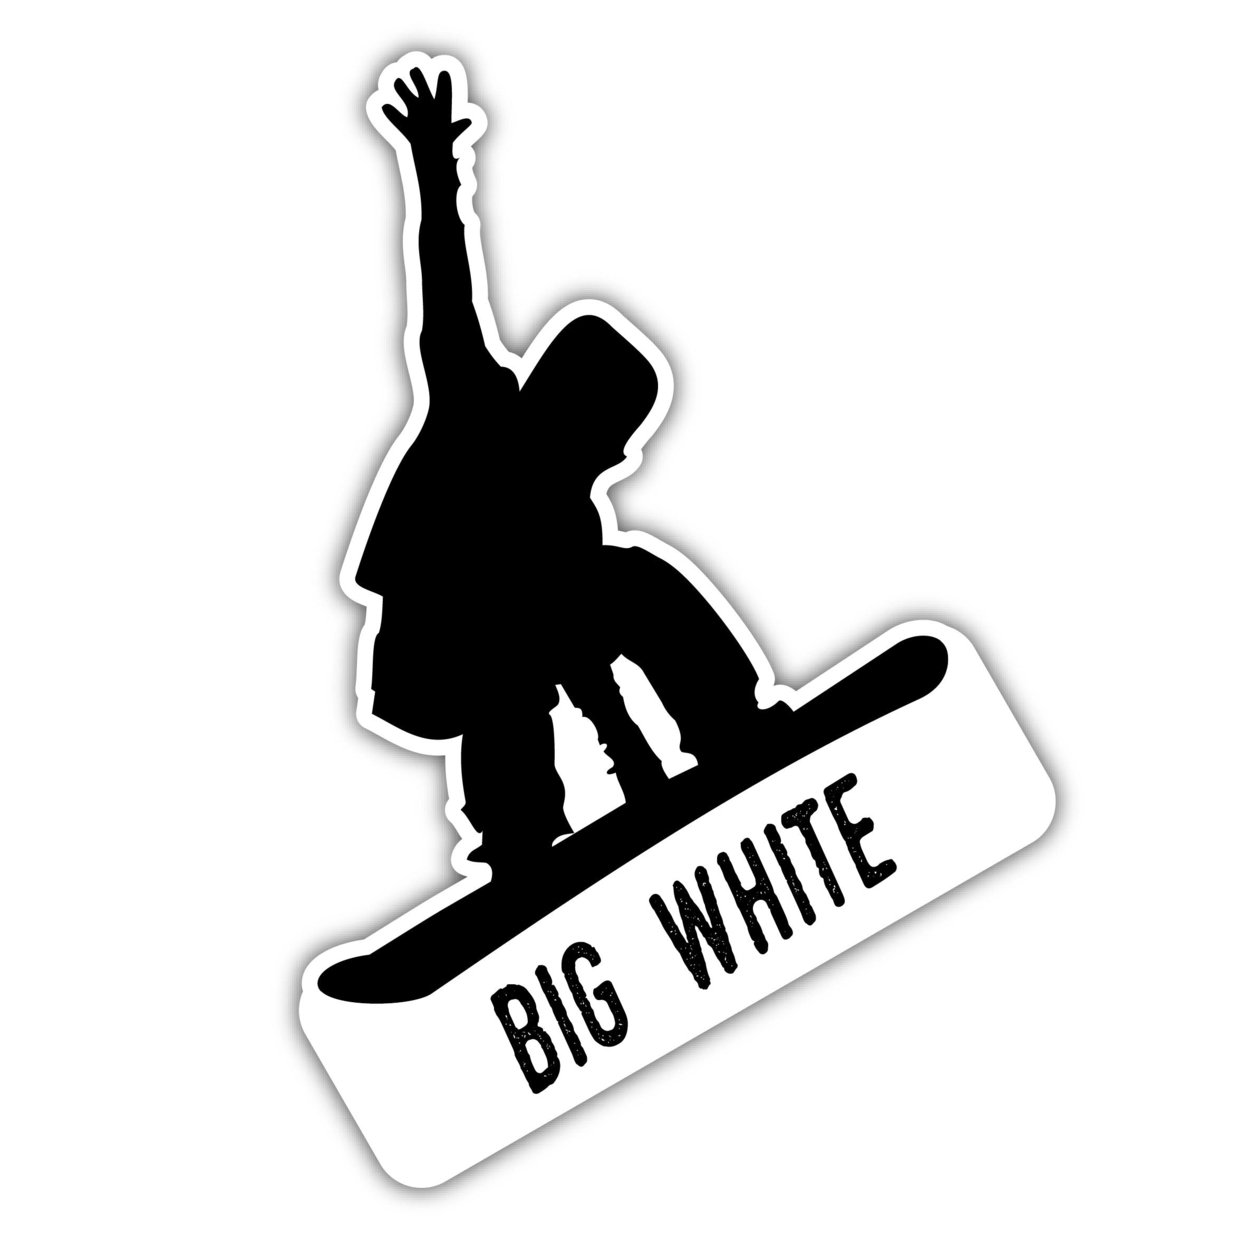 Big White British Columbia Ski Adventures Souvenir 4 Inch Vinyl Decal Sticker Board Design